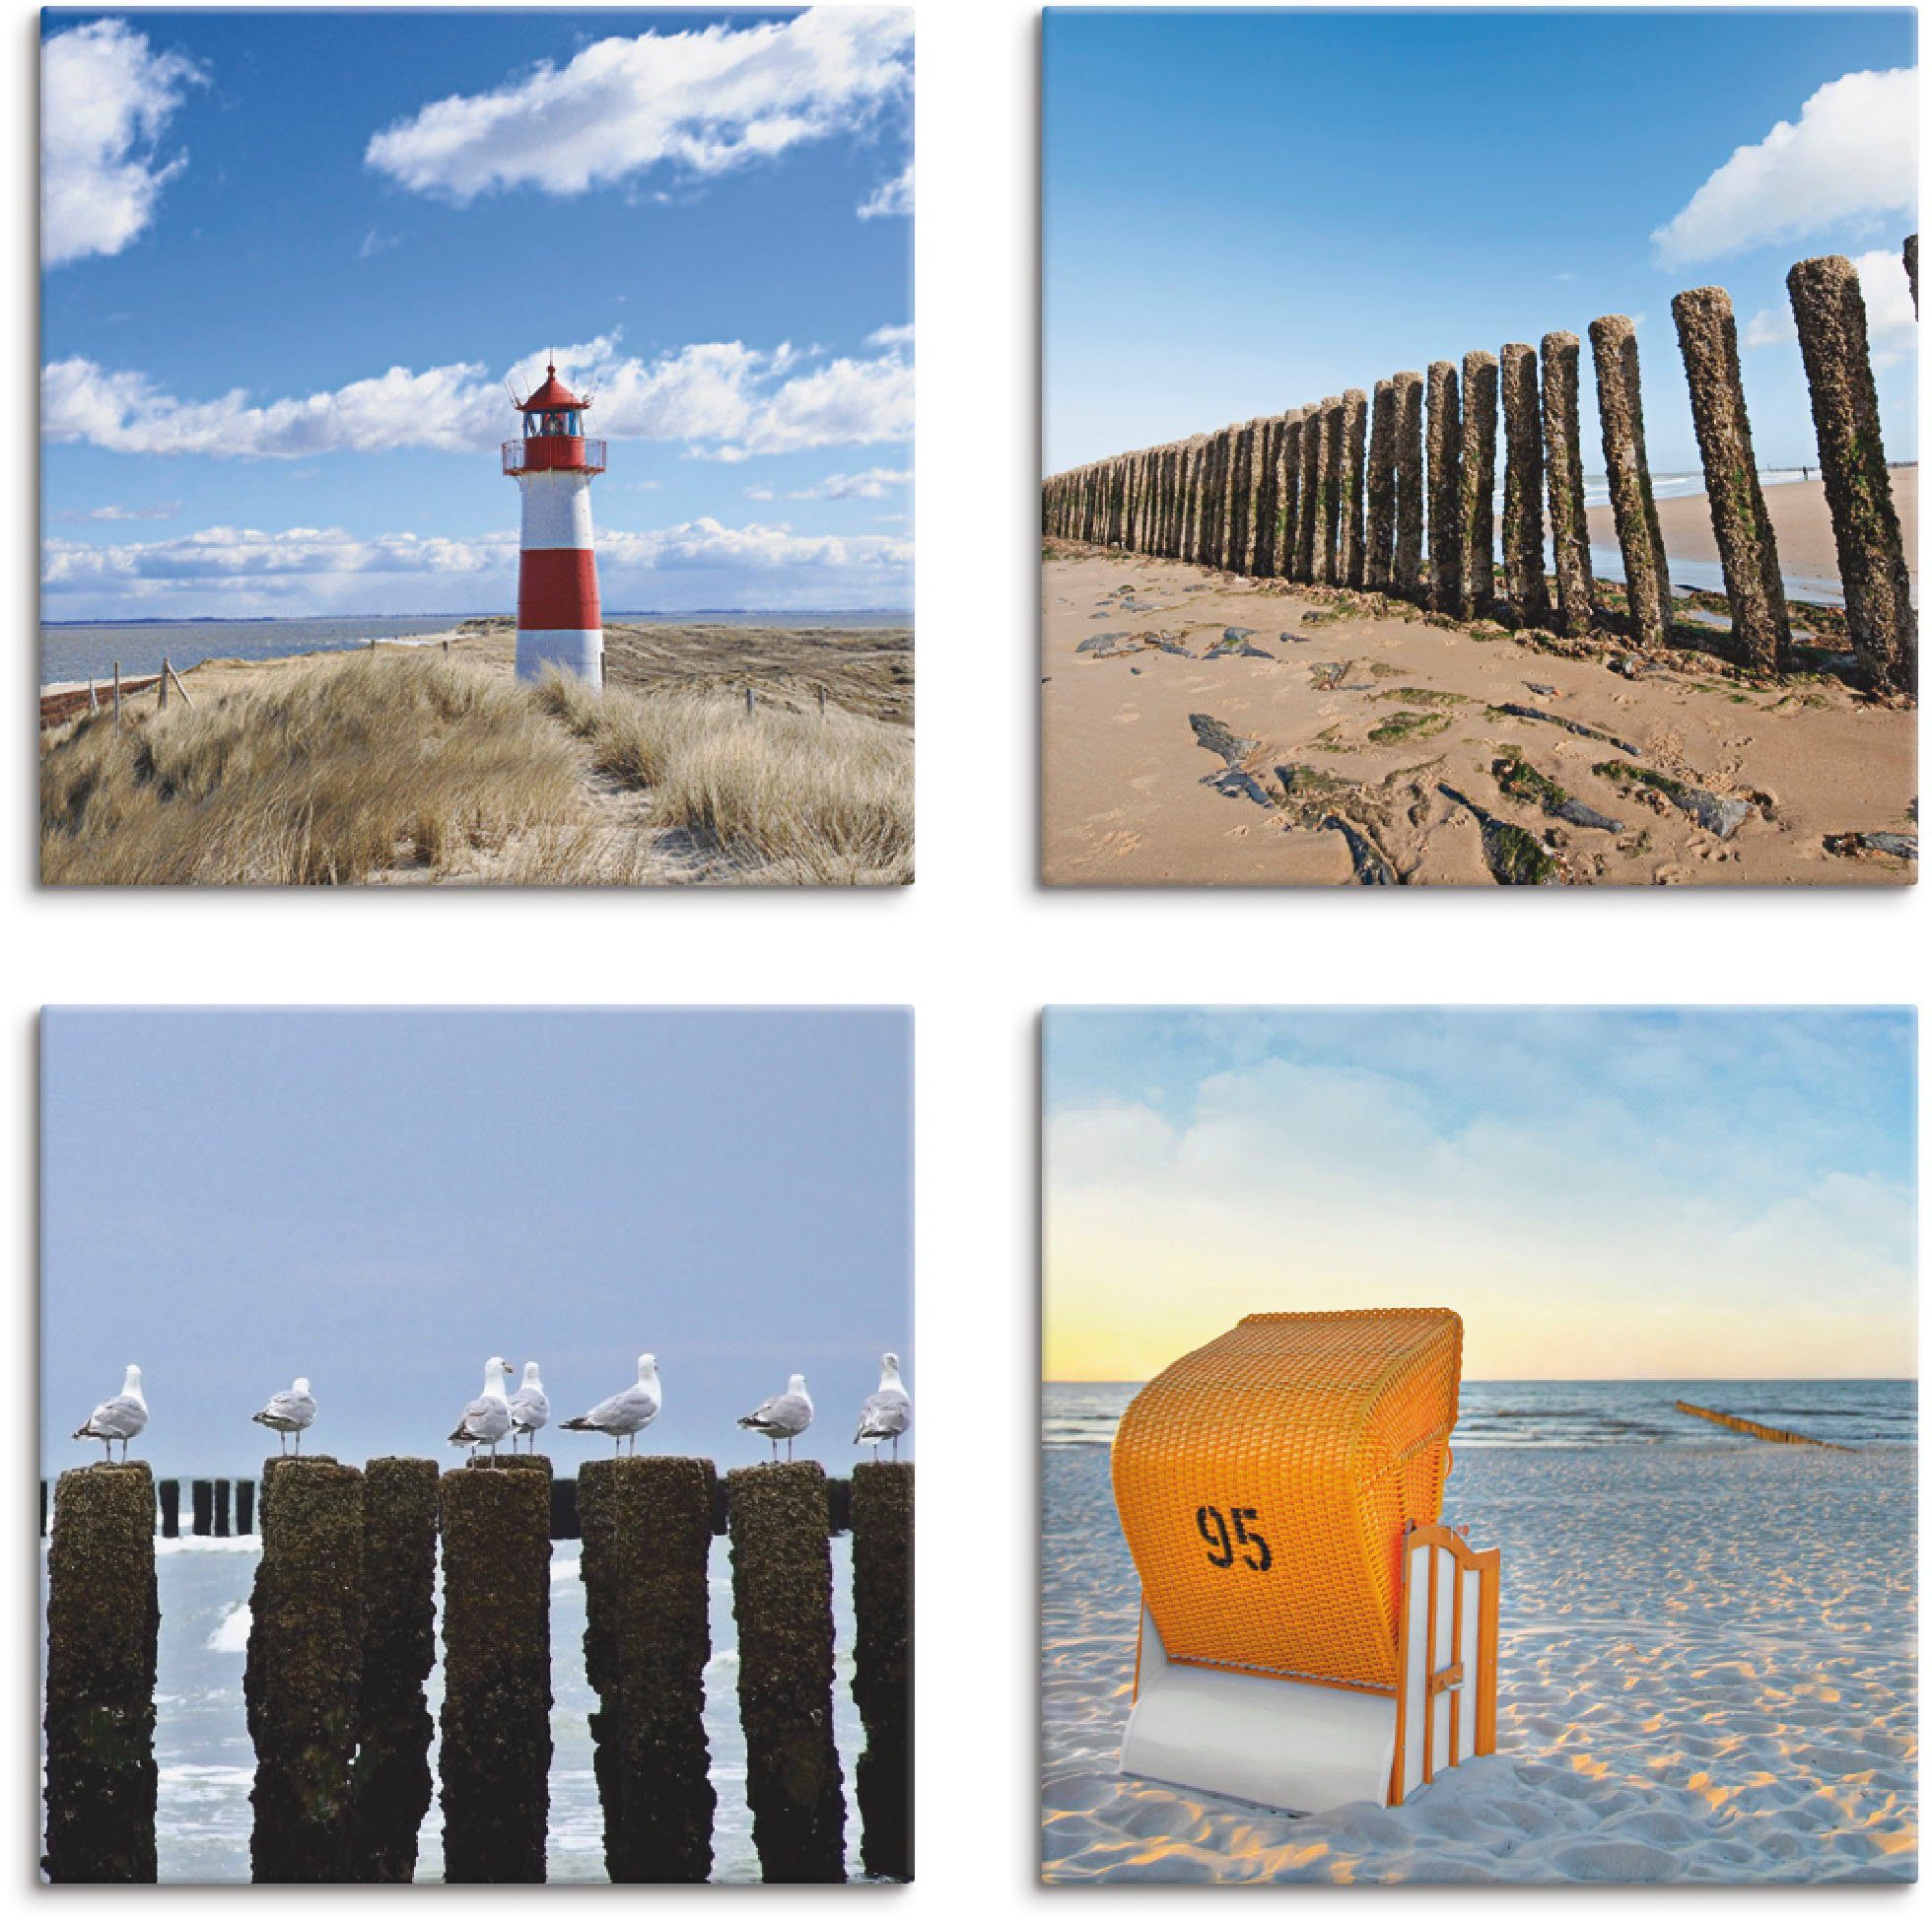 Artland Artprint op linnen Vuurtoren Sylt strand meeuwen strandstoel (4 stuks)